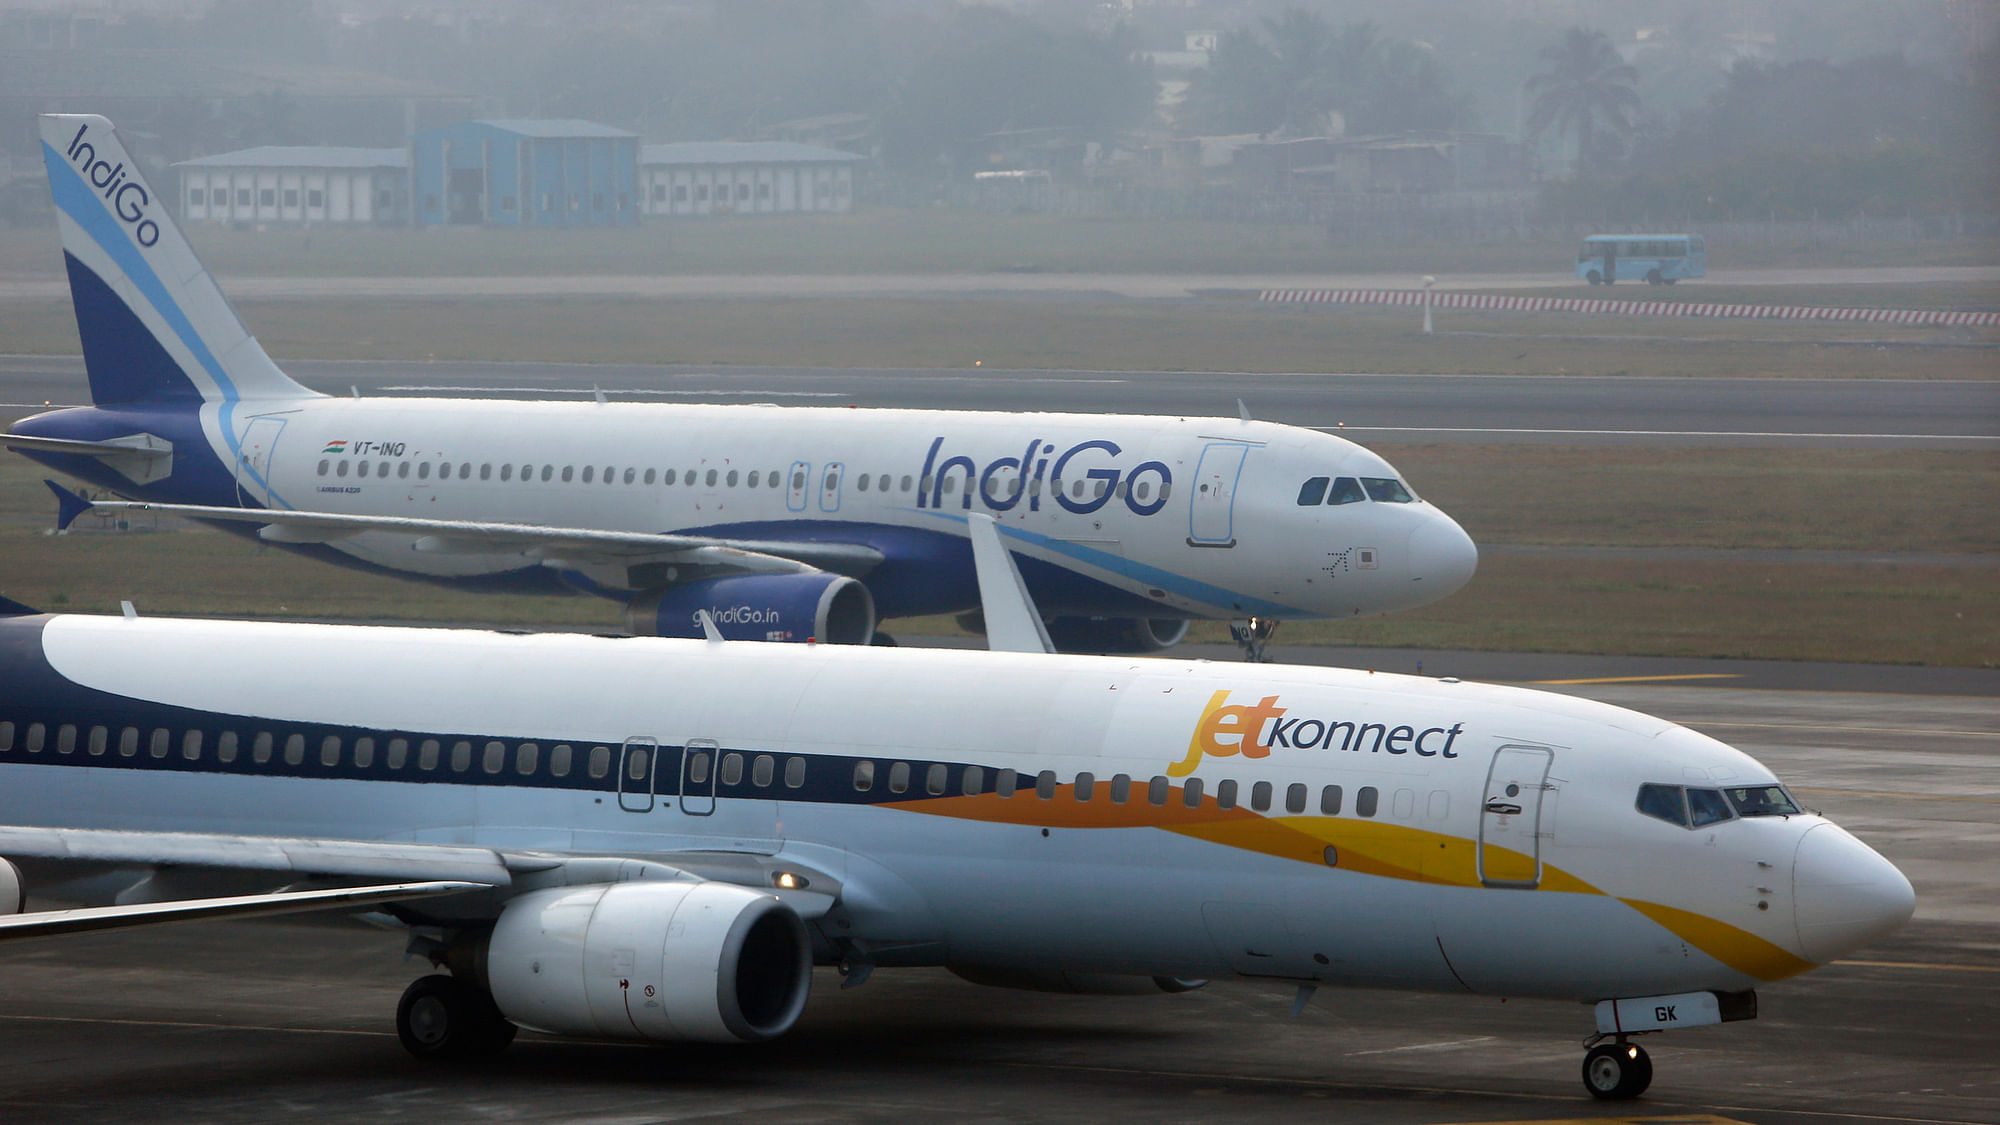 An IndiGo Airlines Airbust A320 aircraft and JetKonnect  Boeing 737 aircraft taxi at Mumbai’s Chhatrapathi Shivaji International Airport.